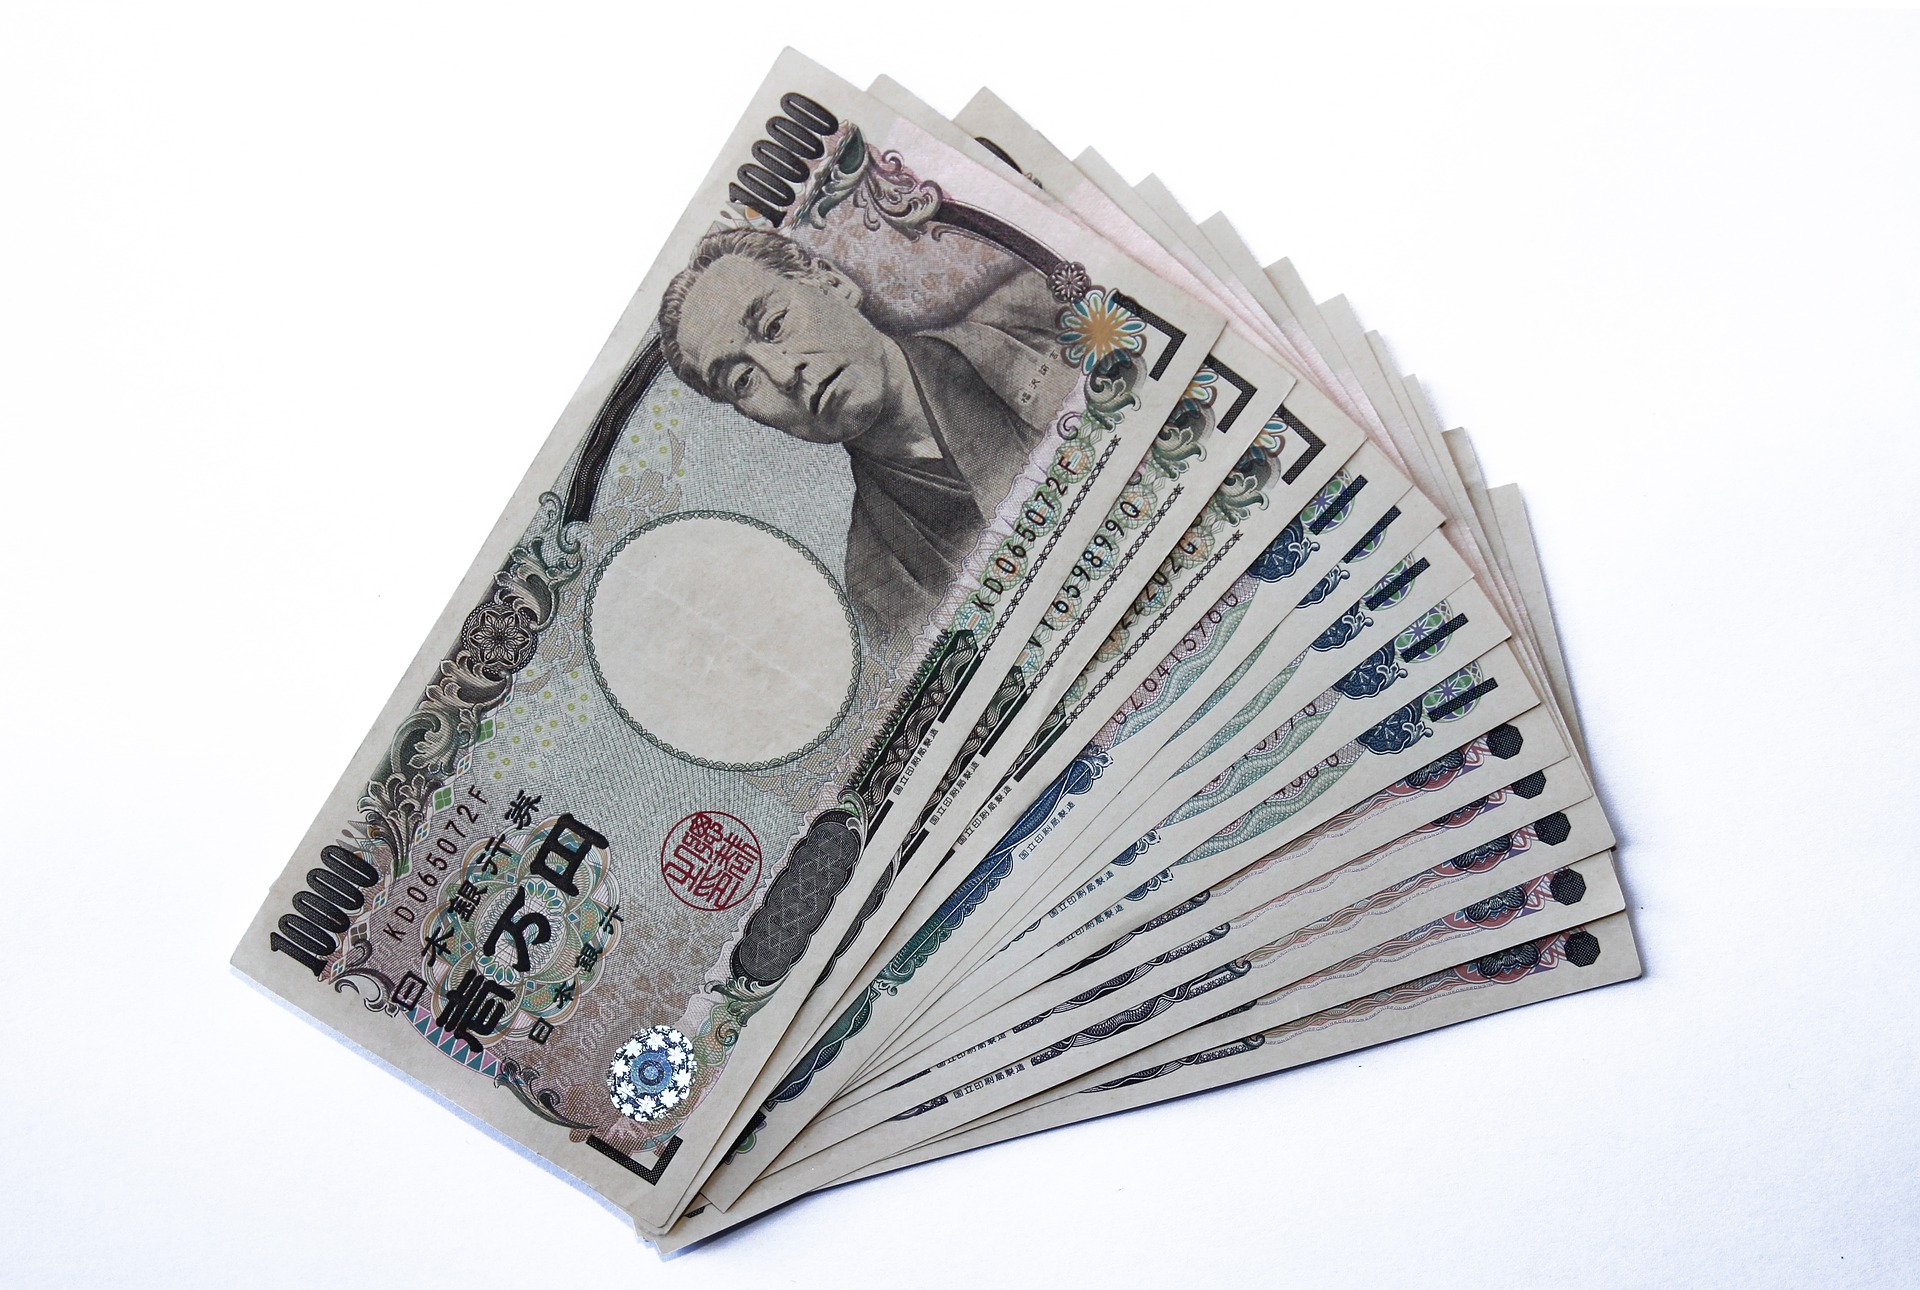 Indonesia terbitkan surat utang negara Yen Jepang senilai 13,21 triliun rupiah